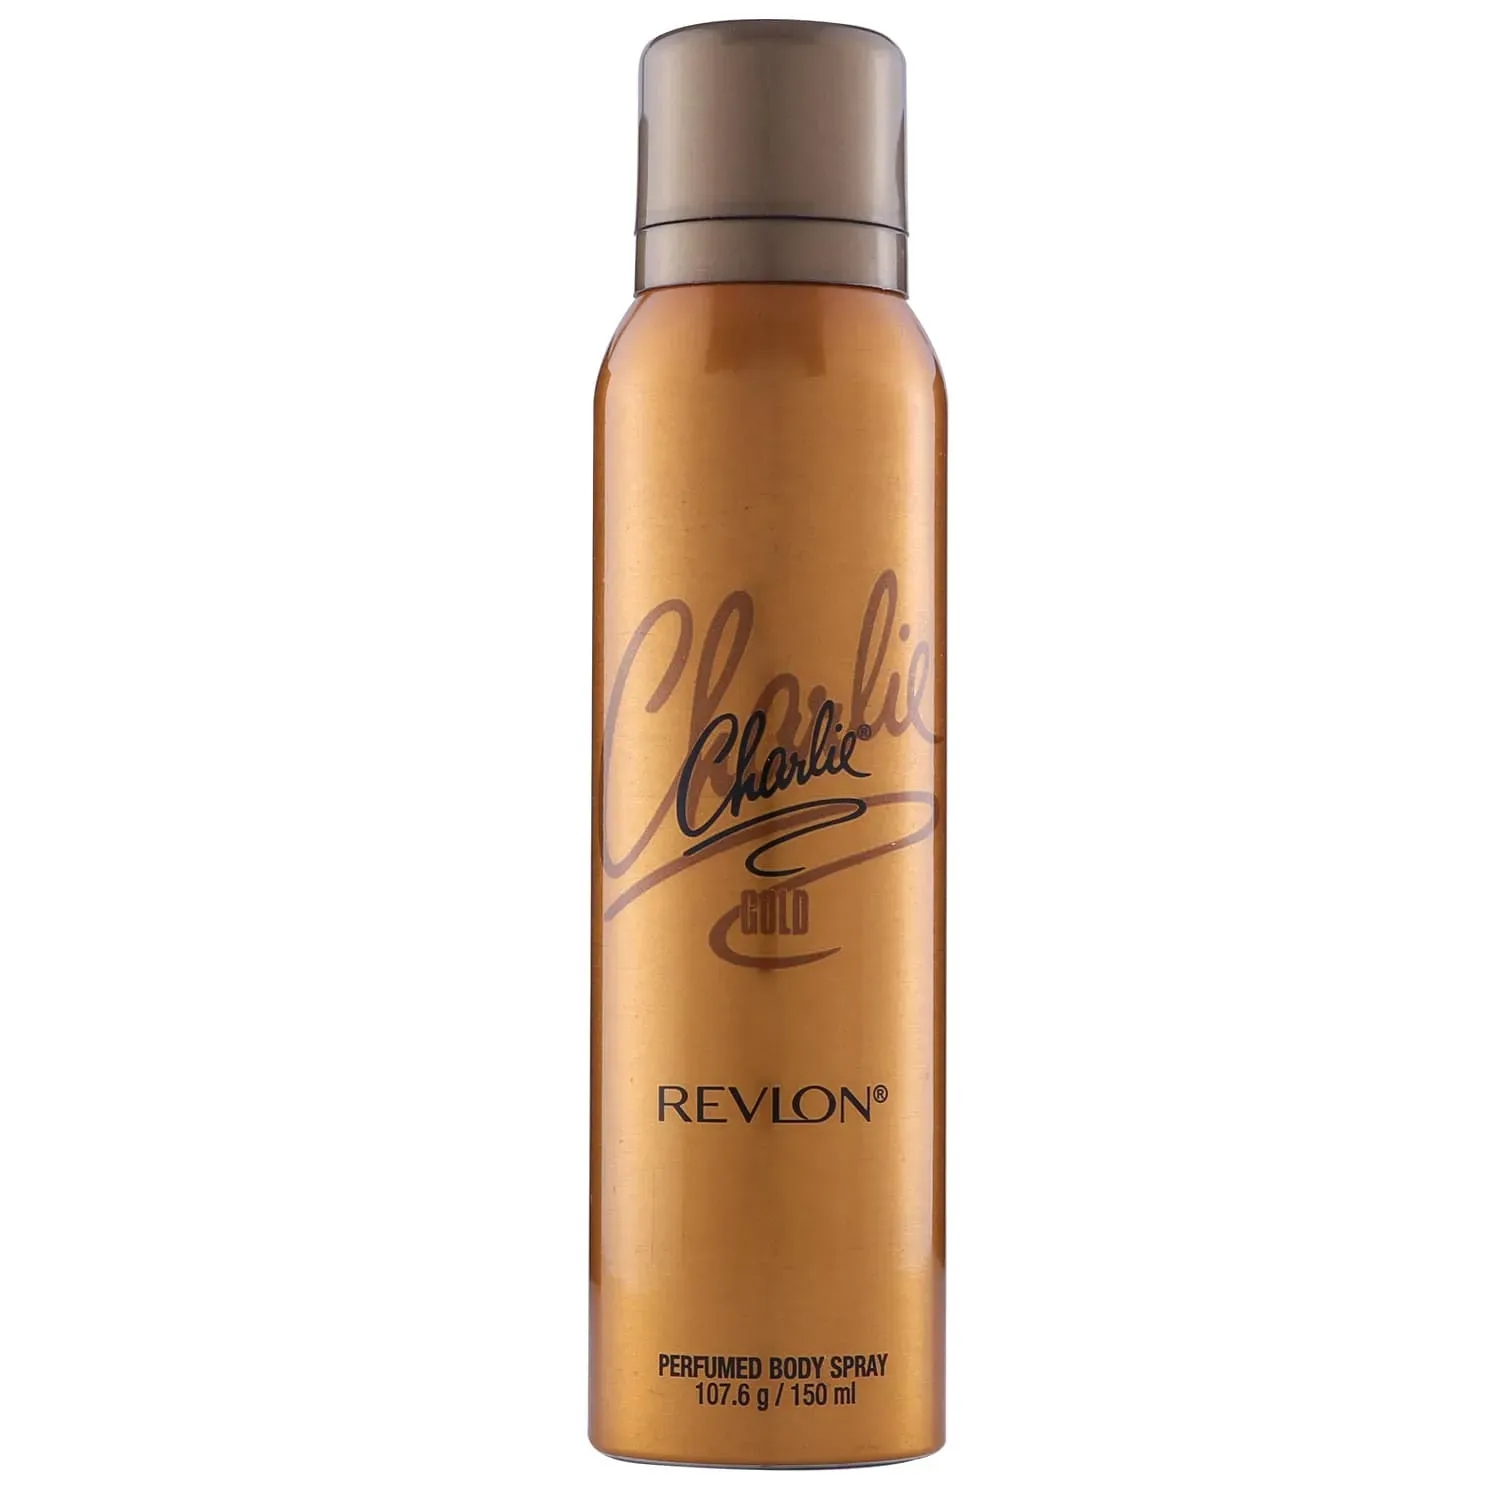 Revlon | Revlon Charlie Perfumed Body Spray - Gold (150 ml)